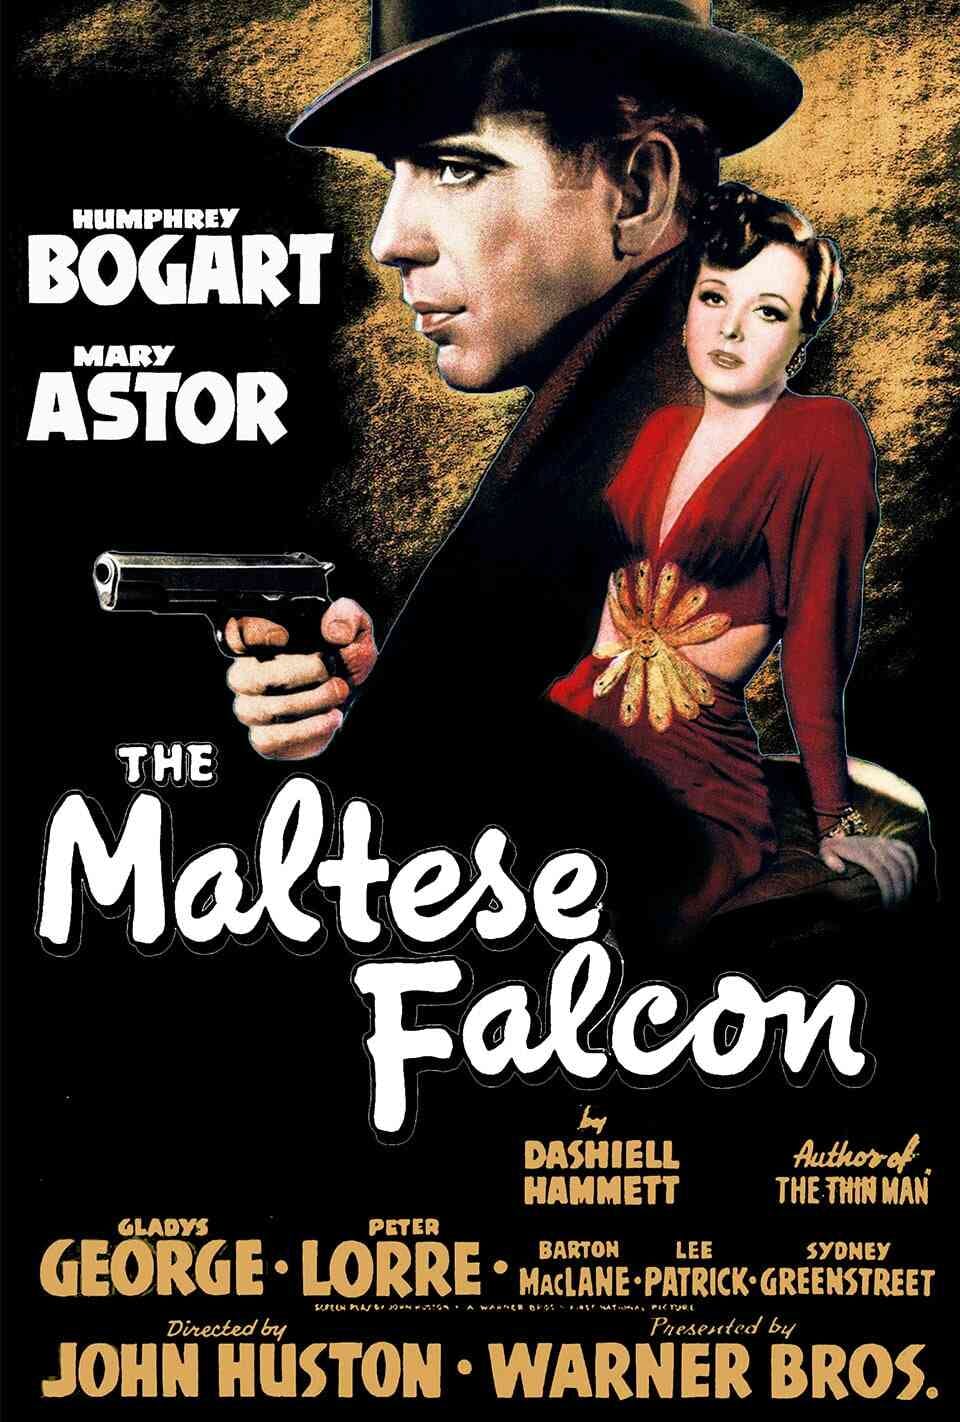 Read The Maltese Falcon screenplay.